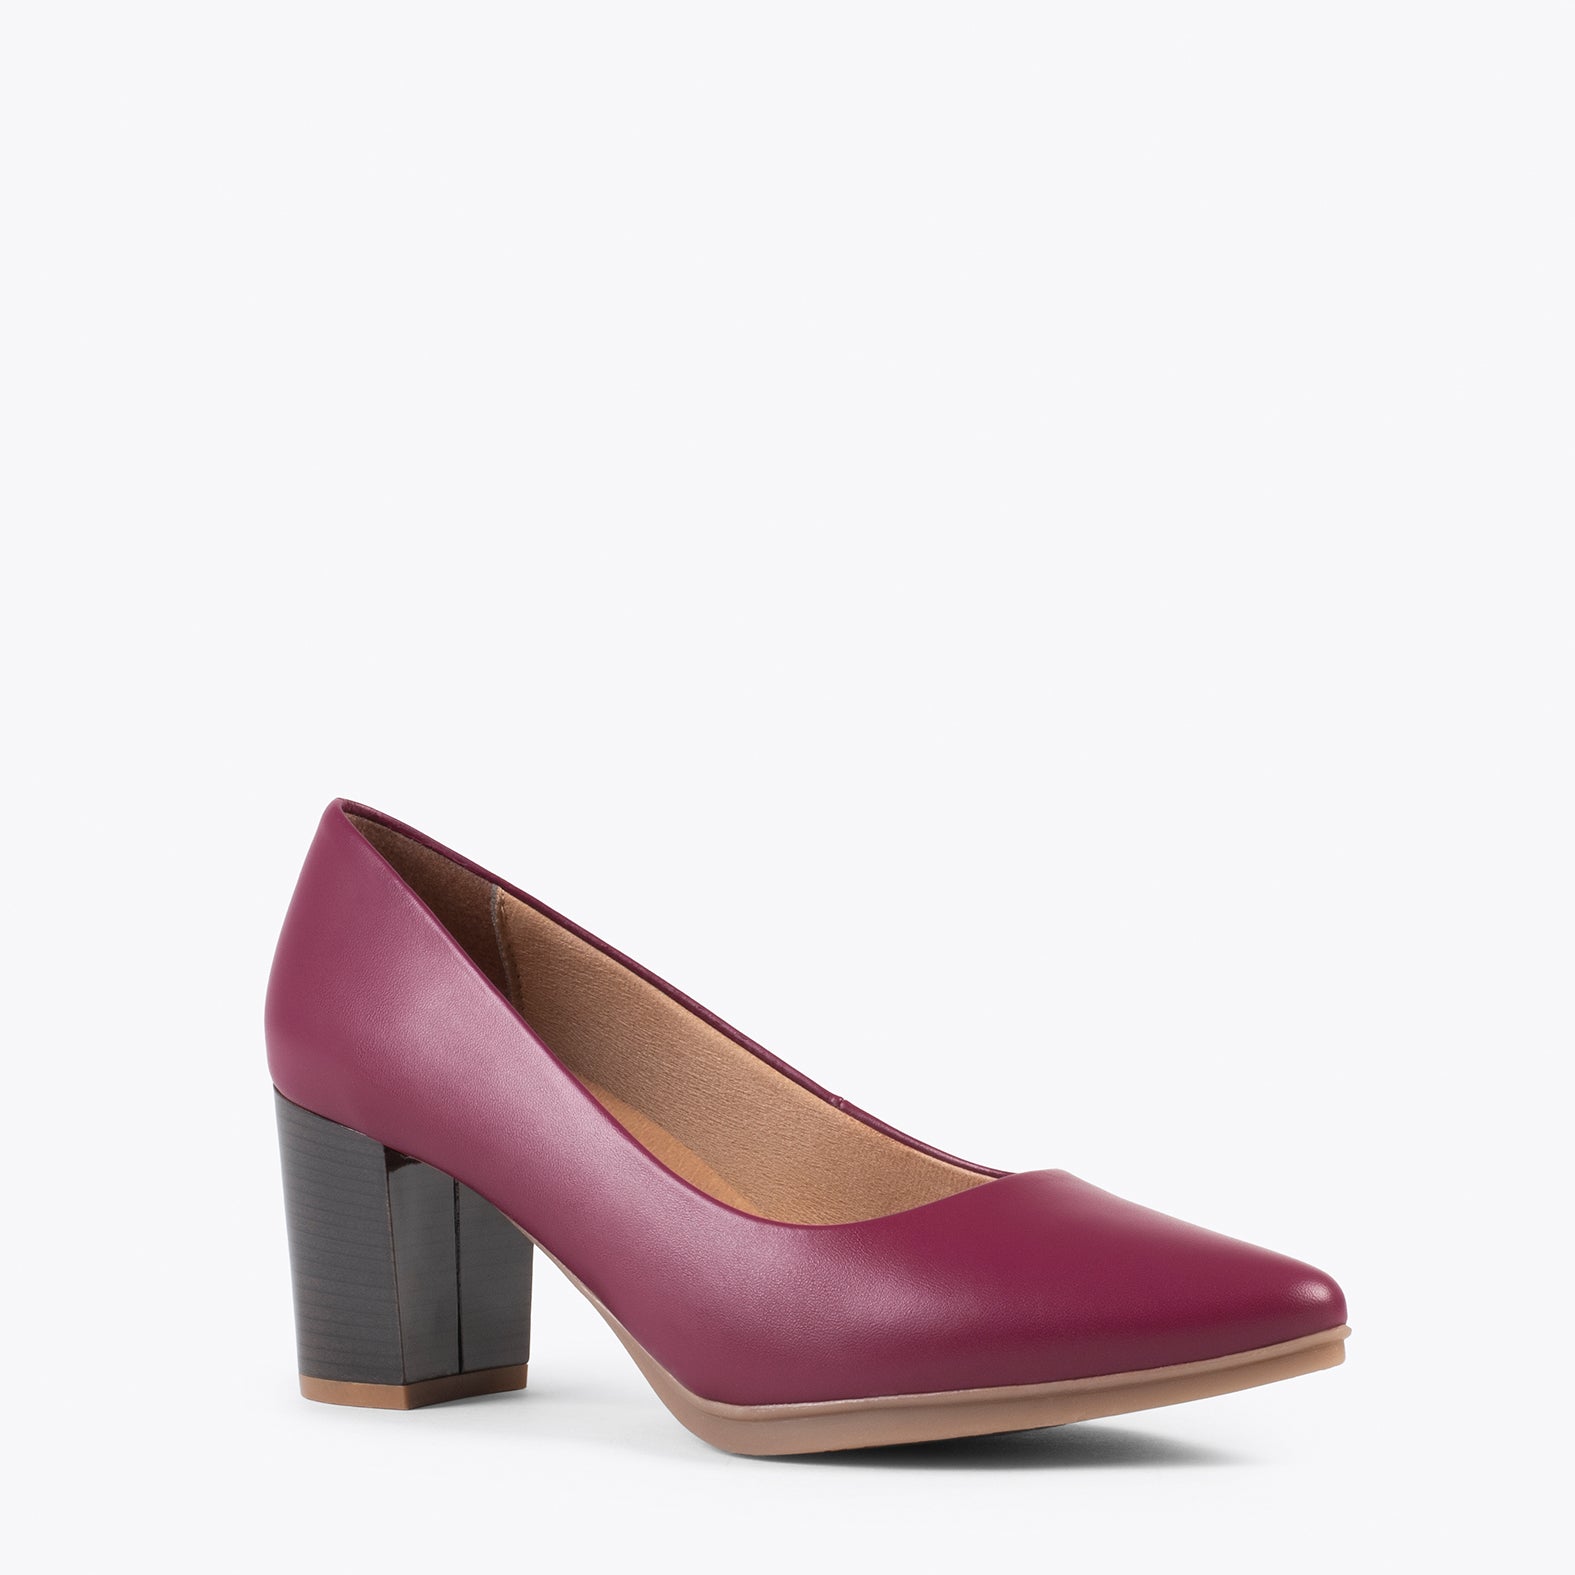 URBAN S SALON – GARNET nappa leather mid heels